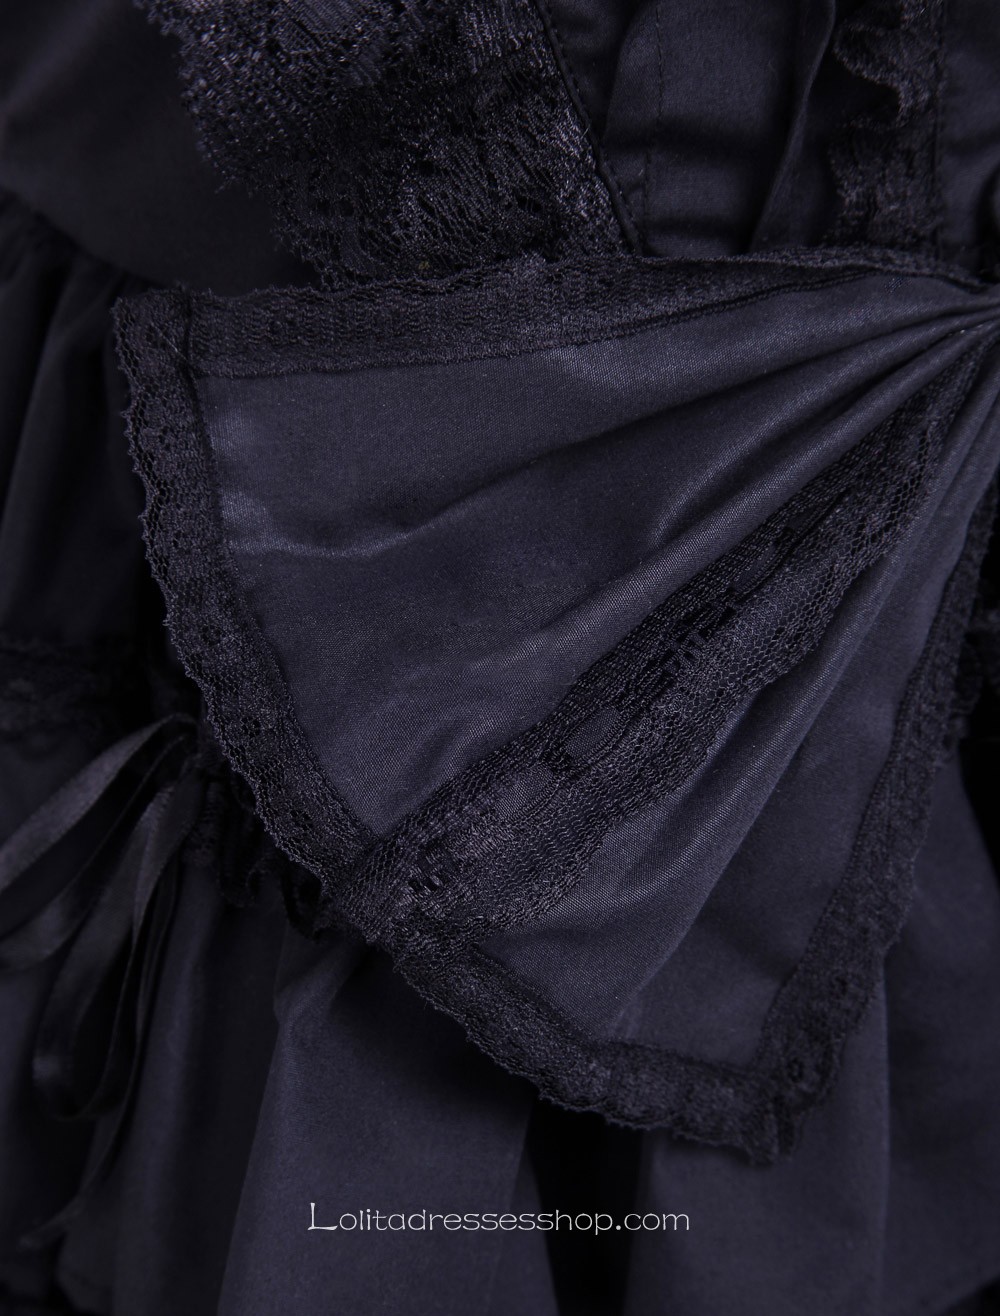 Black Bow Multi-layer Cotton Turndown Collar Gothic Lolita Dress